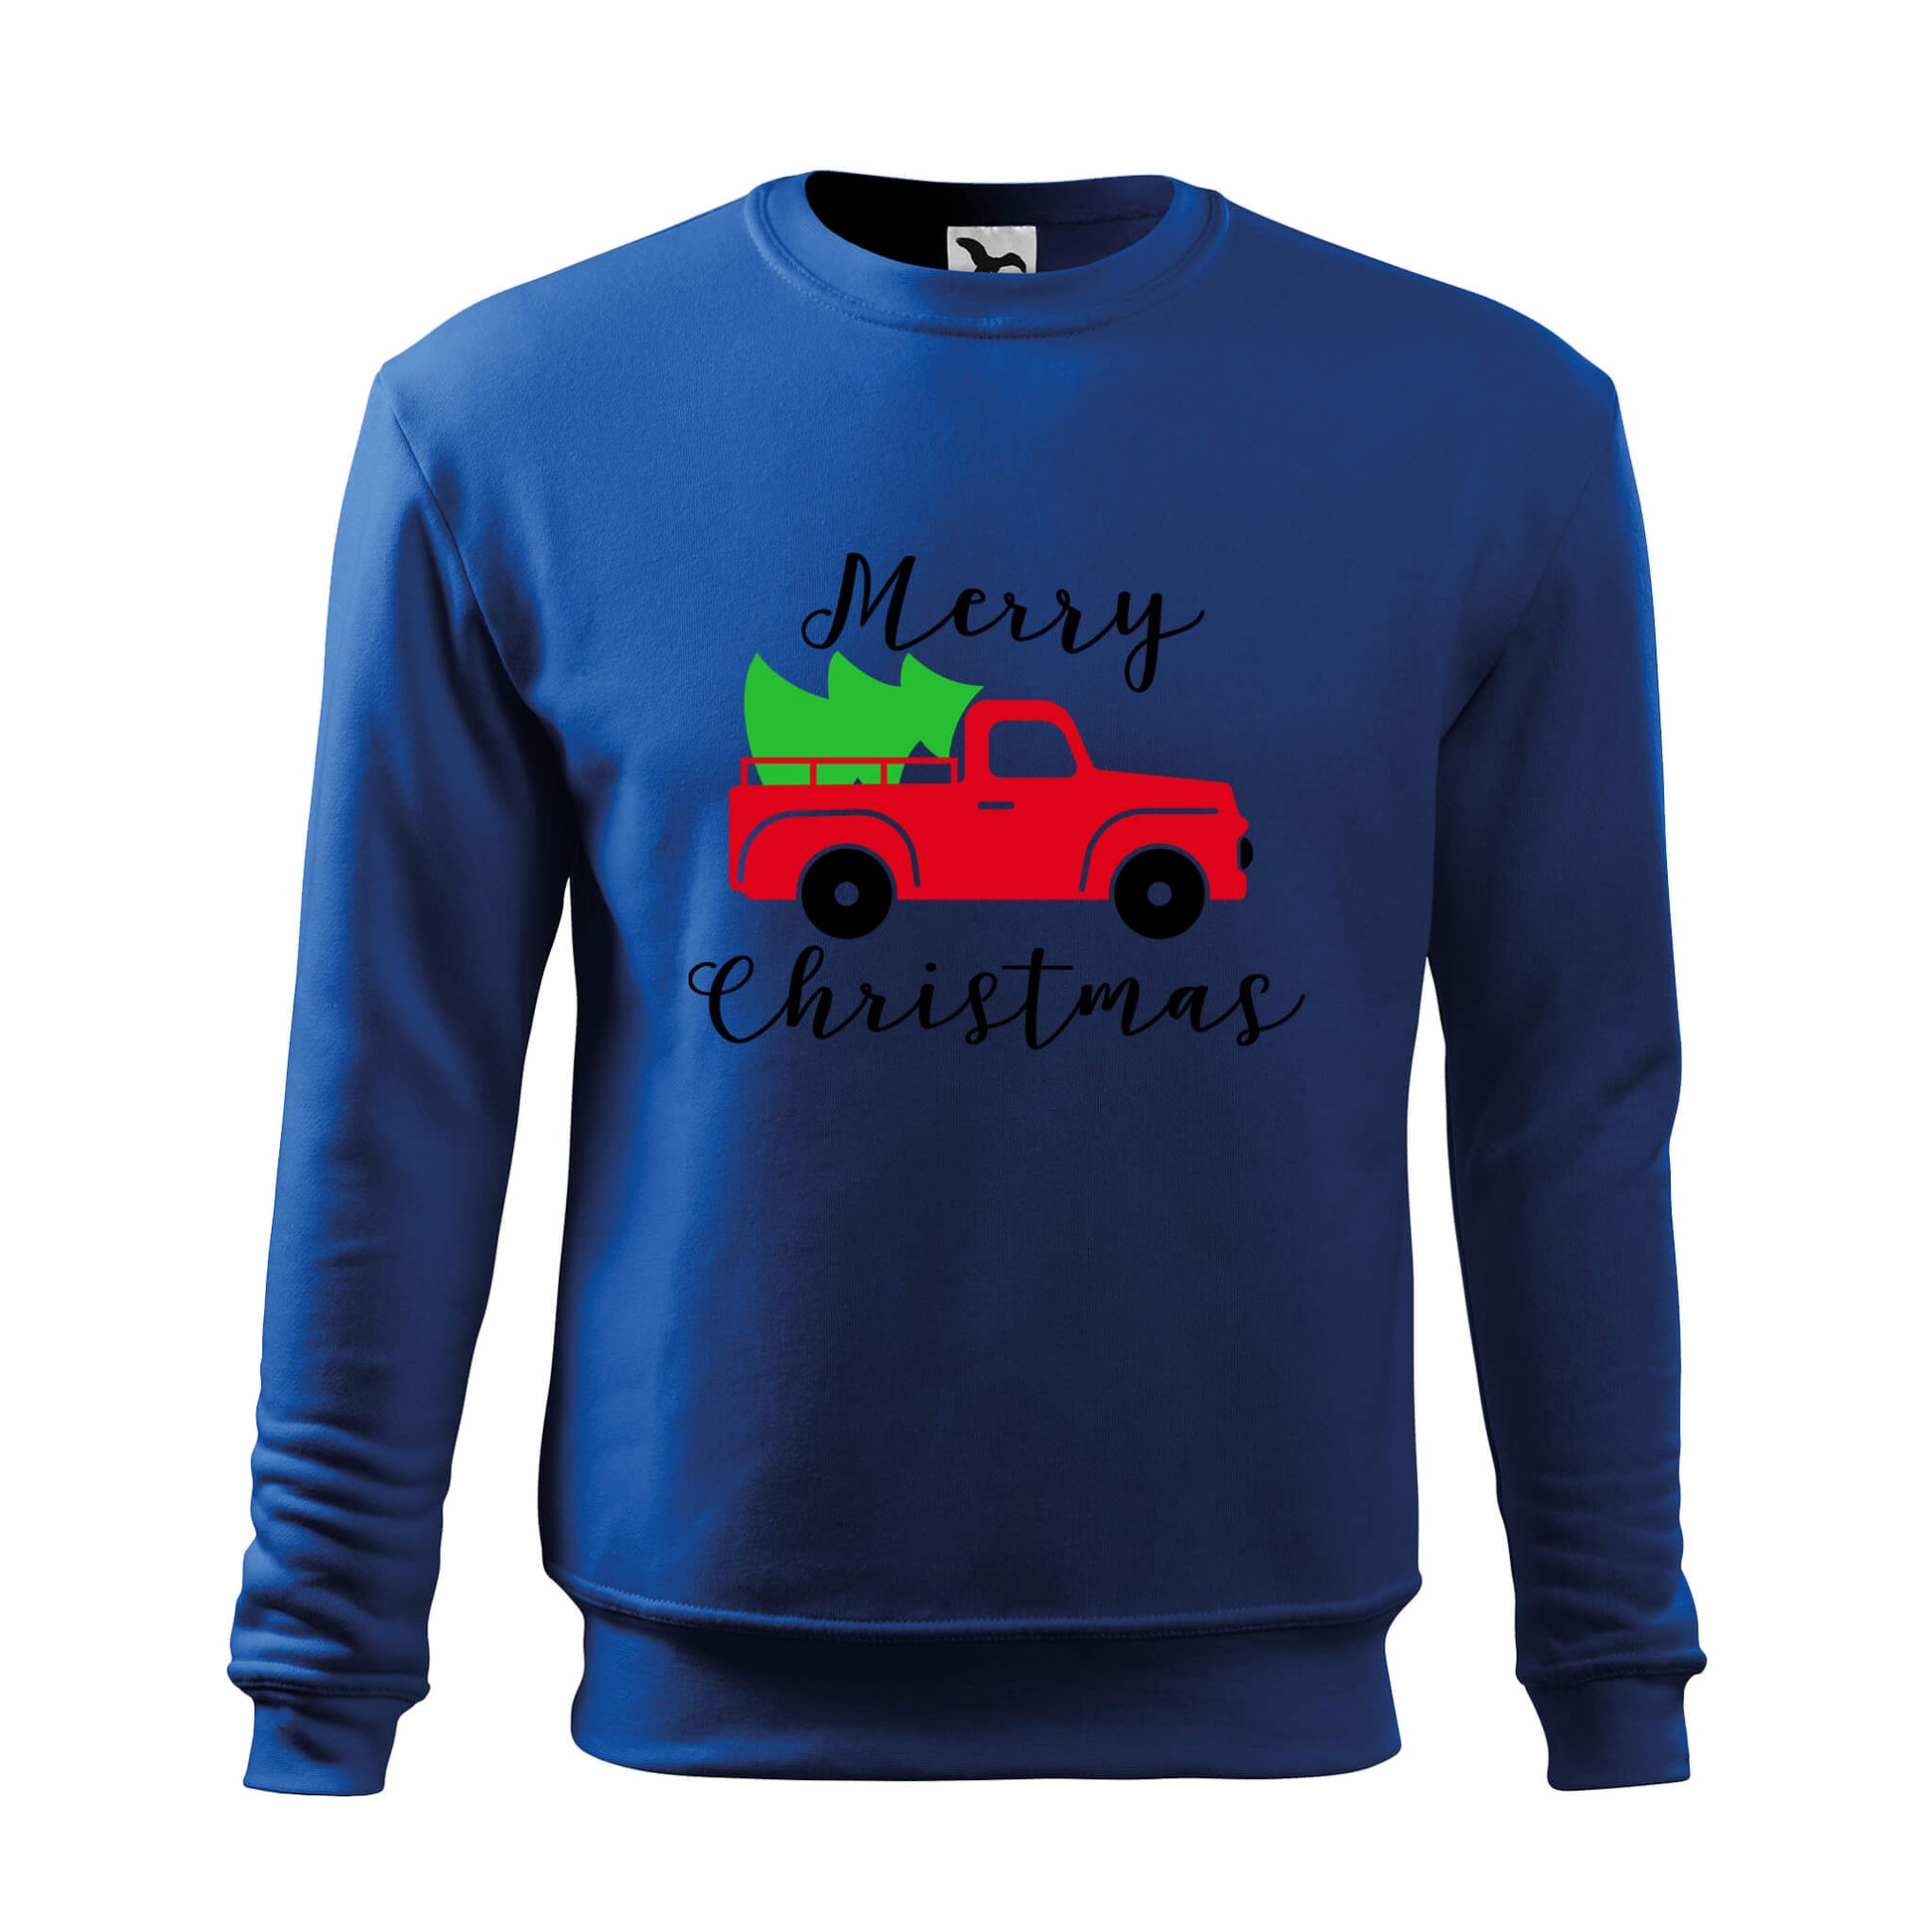 Merry christmas with truck sweatshirt - rvdesignprint